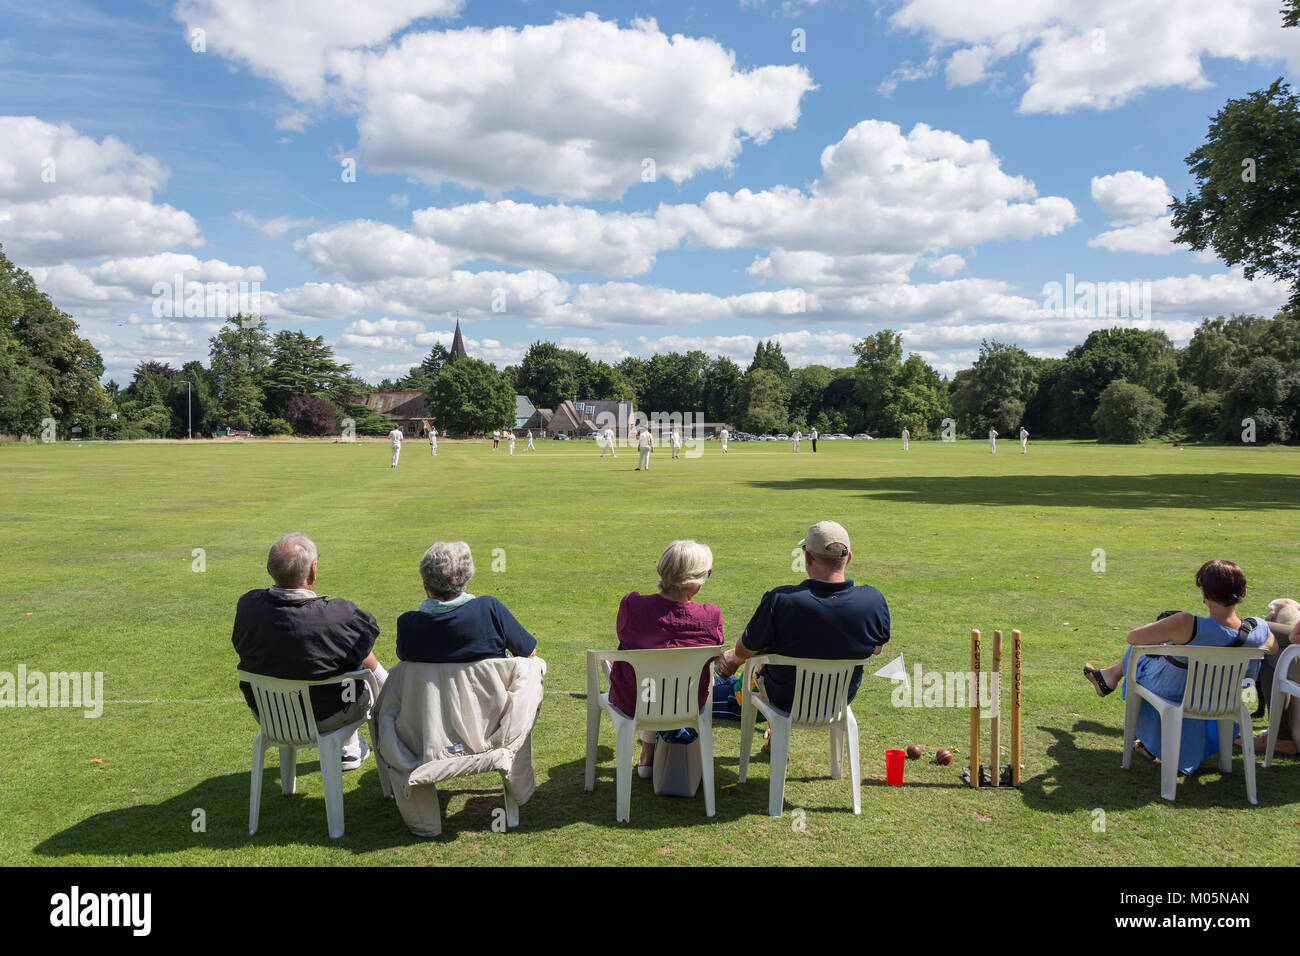 Samedi match à Chorleywood Cricket Club, Chorleywood, Hertfordshire, Angleterre, Royaume-Uni Banque D'Images